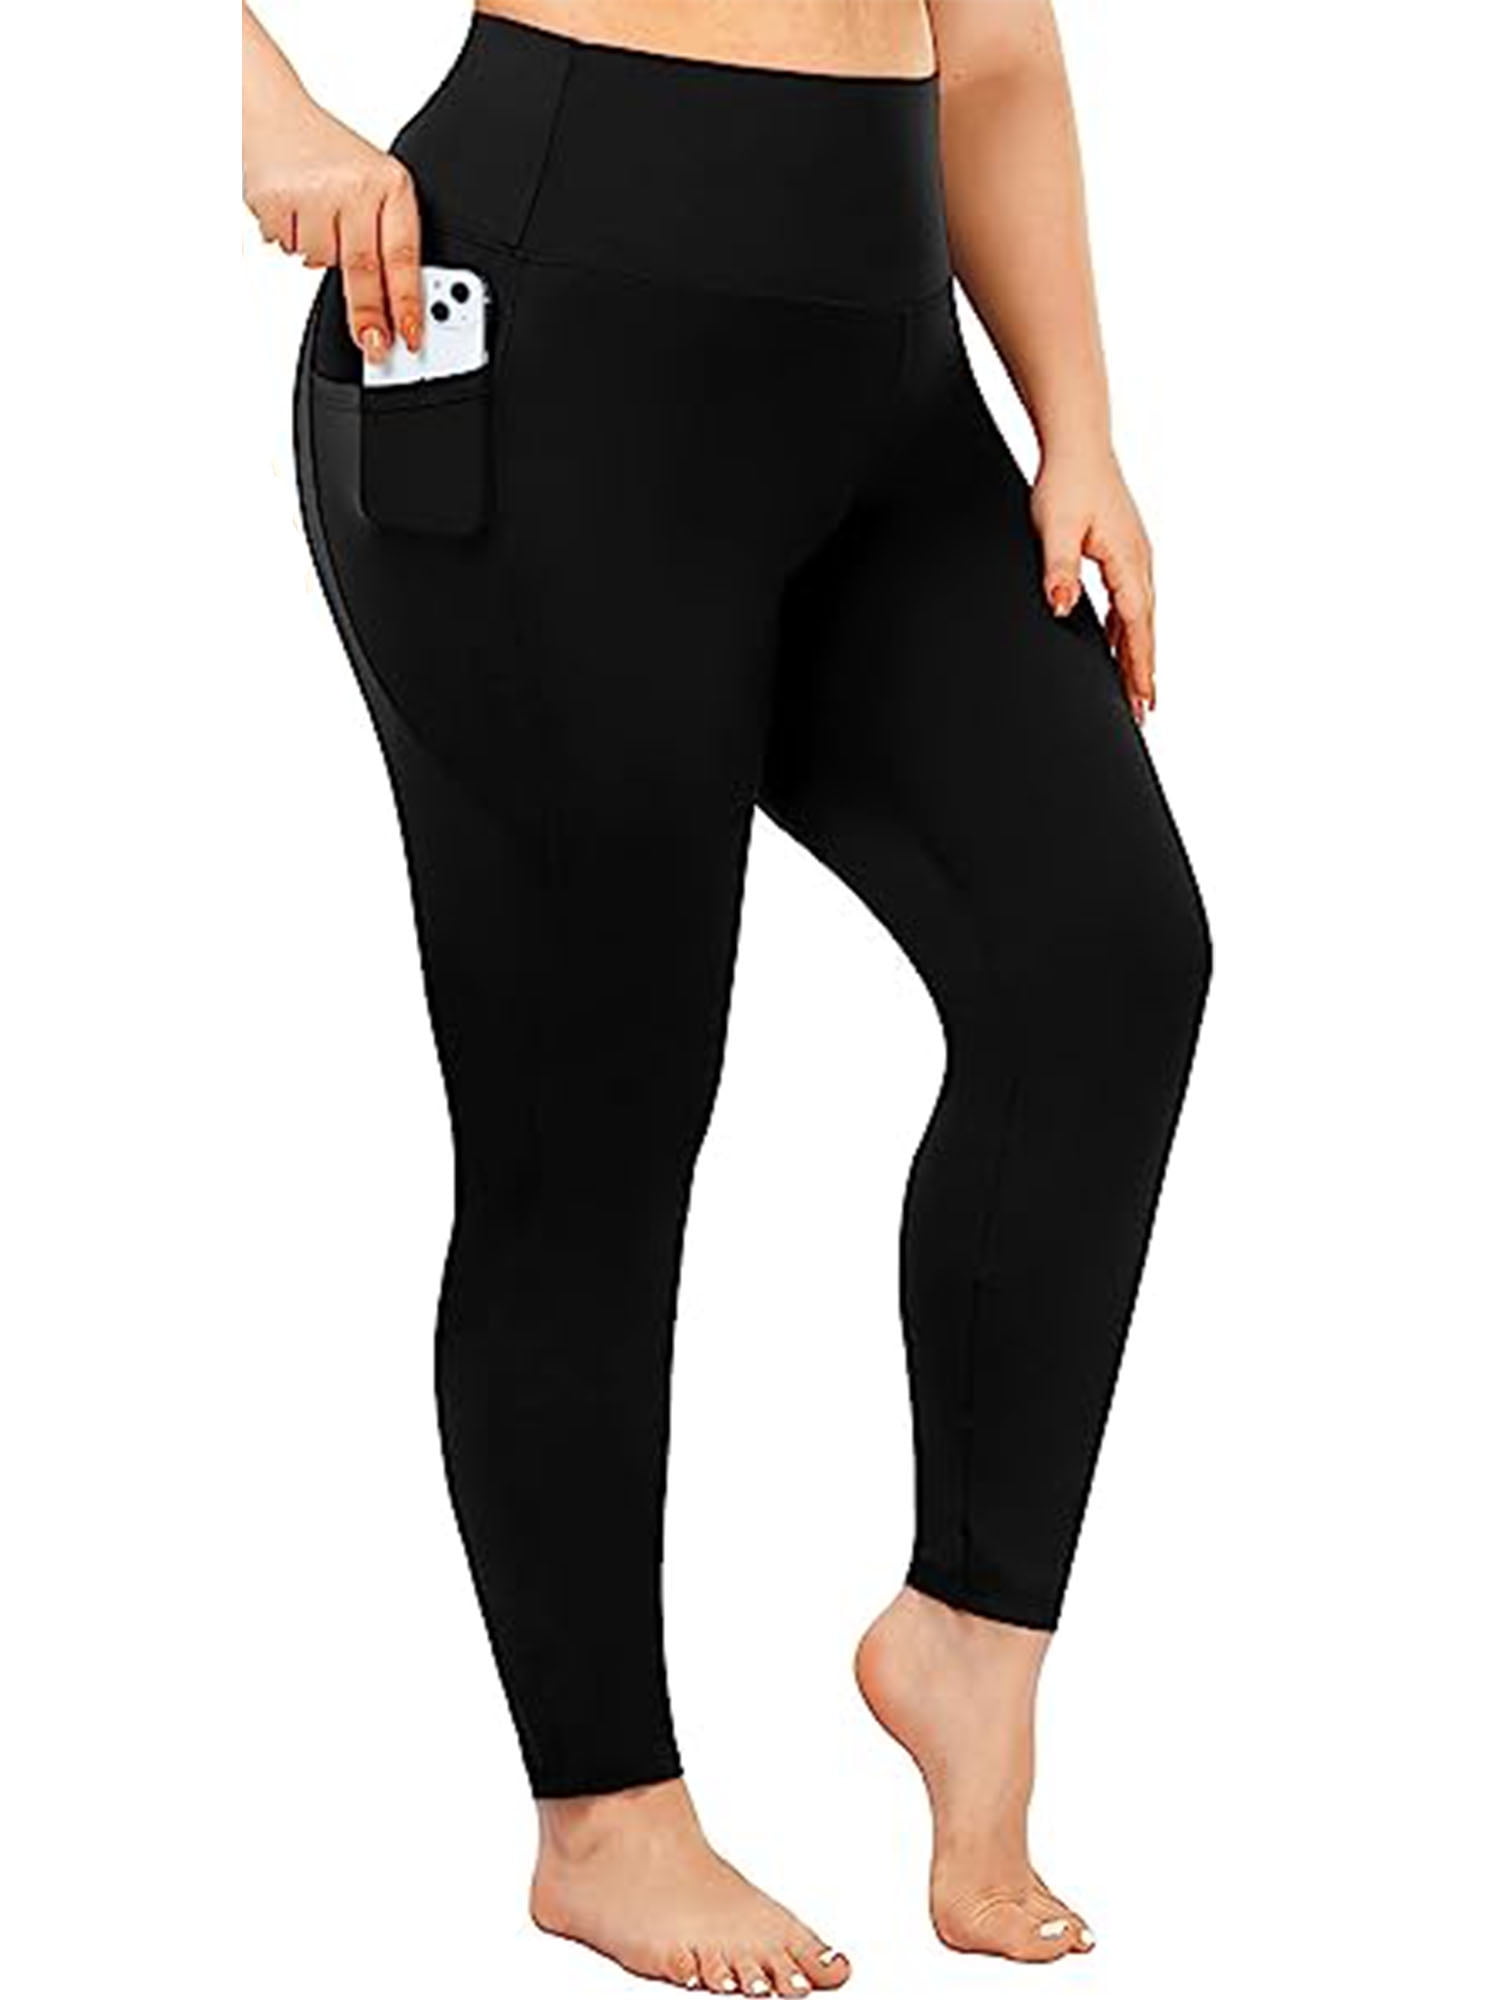 FORJOE Women's High Waist Yoga Pants with Pockets Plus Size Leggings ...